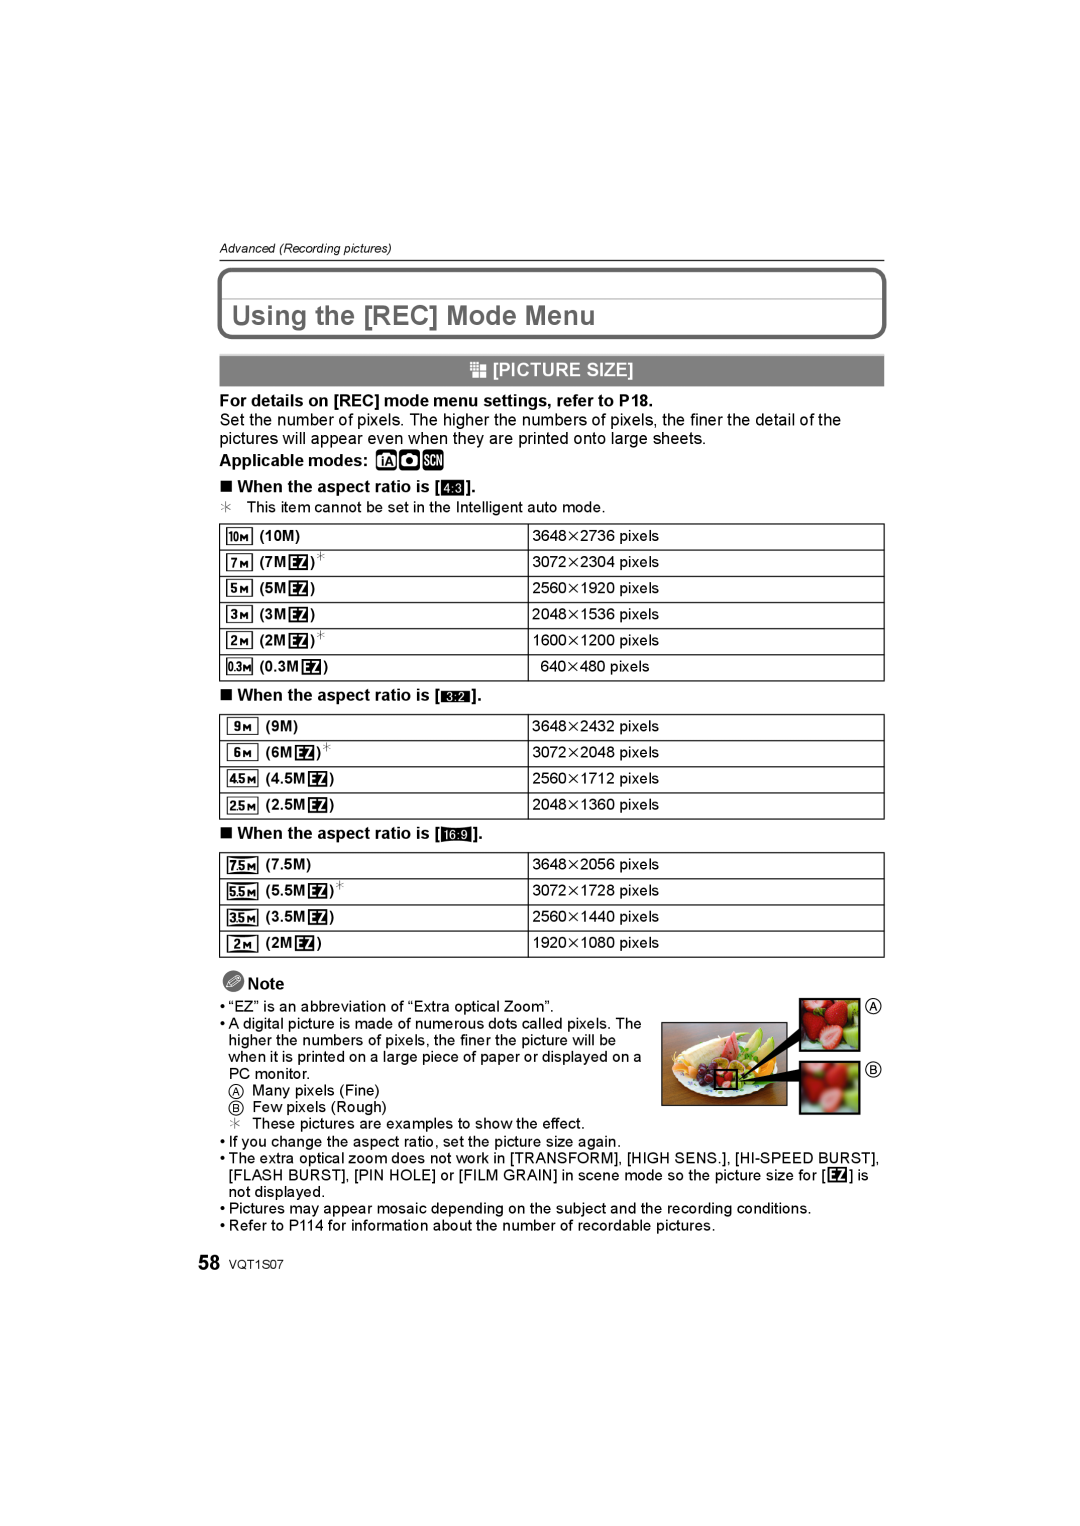 Panasonic DMC-FX38 Using the REC Mode Menu, @ Picture Size, For details on REC mode menu settings, refer to P18 